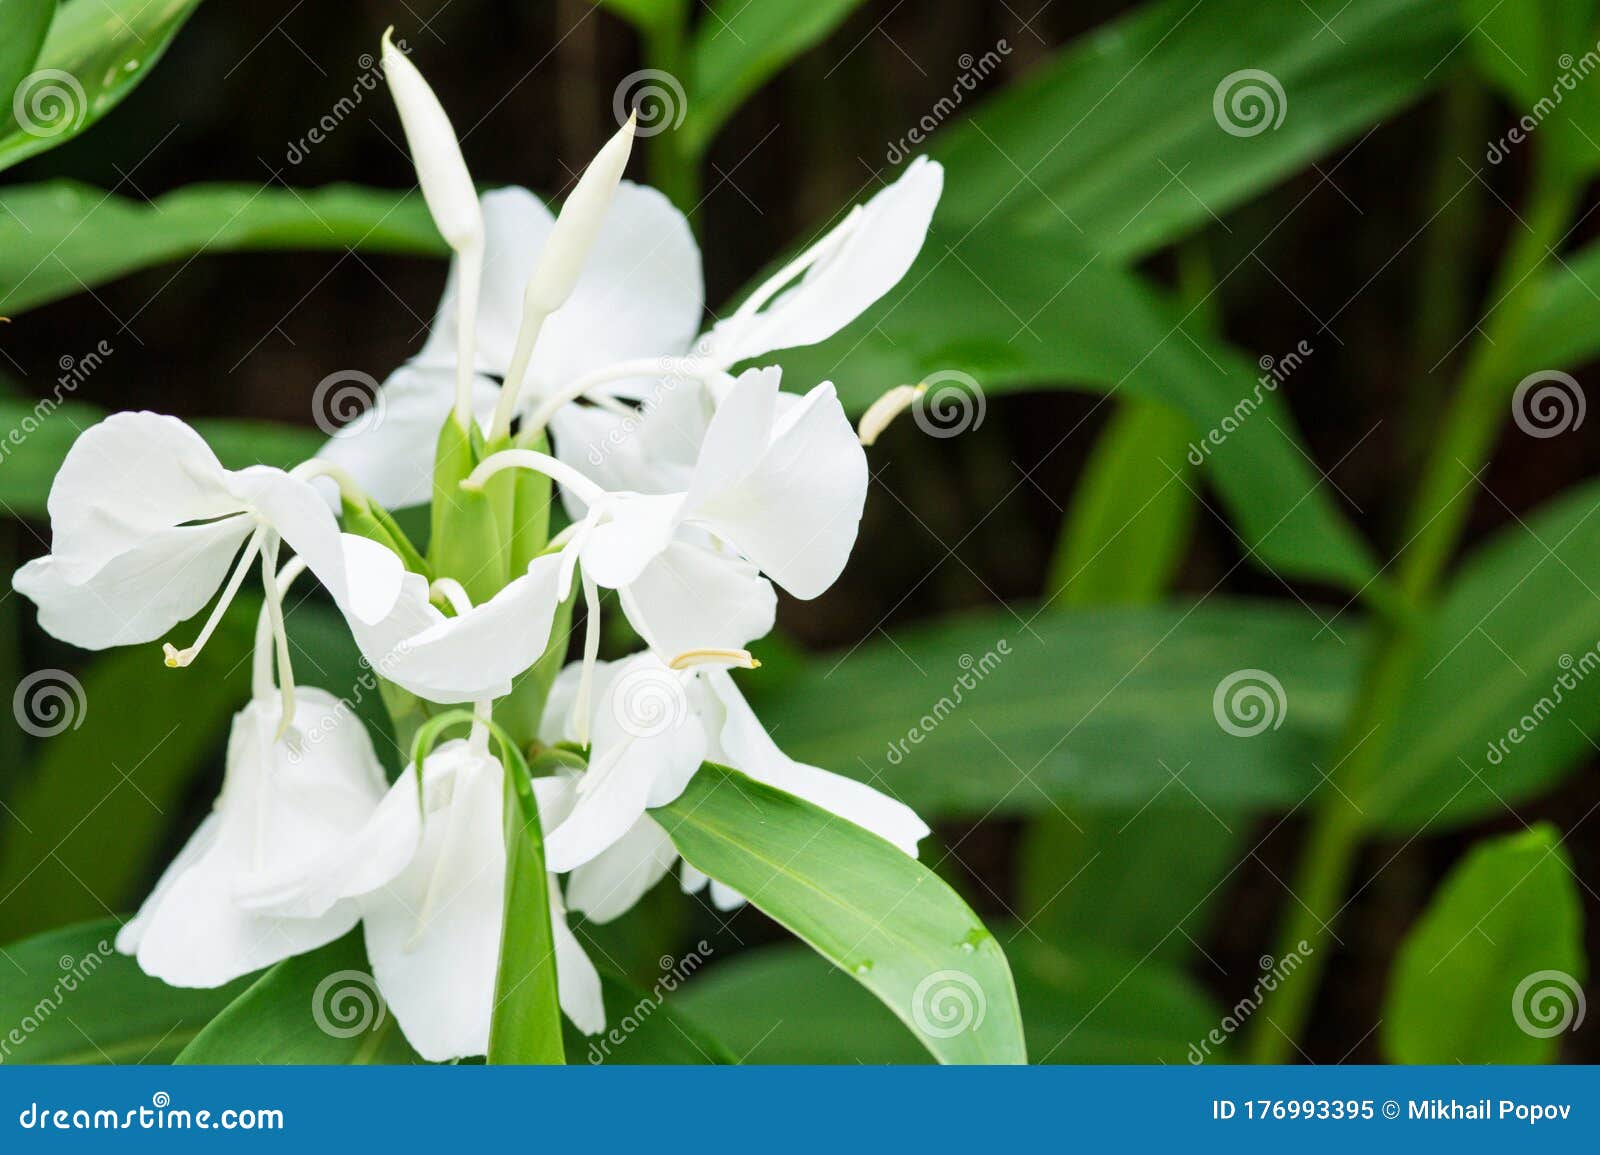 White Ginger Lily Hedychium Coronarium Flower In Singapore Stock Image Image Of Gardening Environment